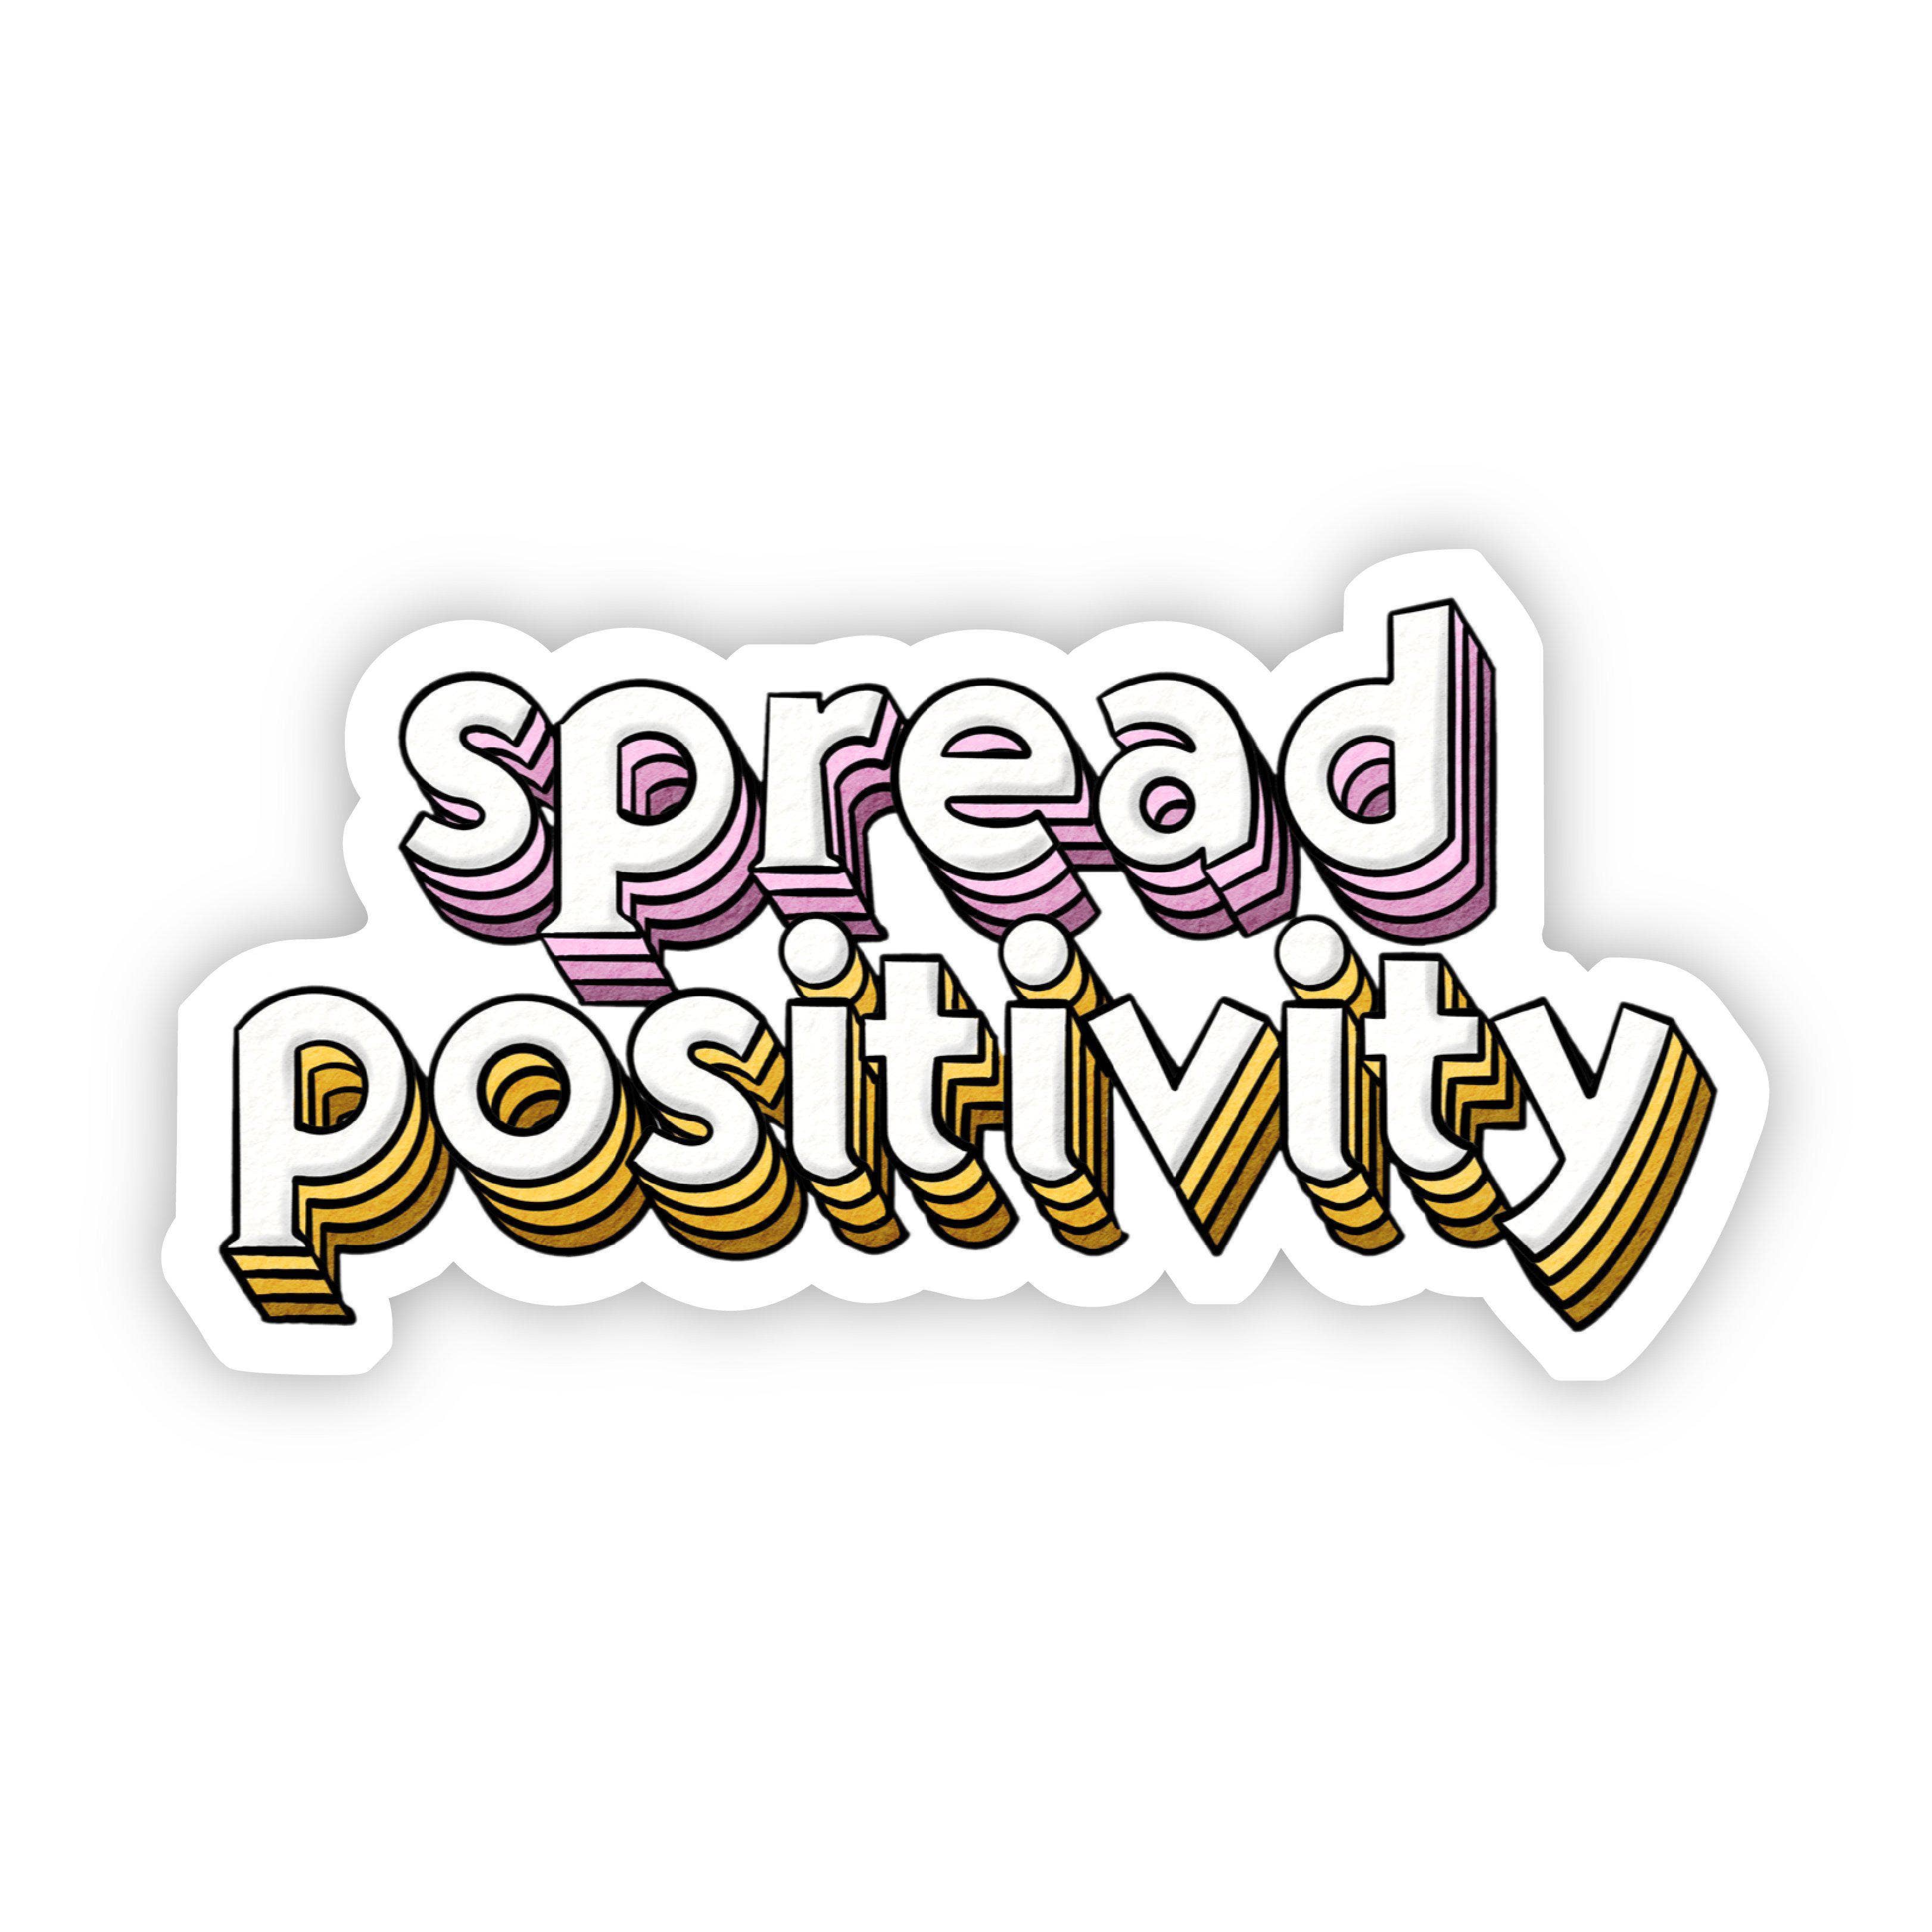 Spread Positivity Lettering Sticker